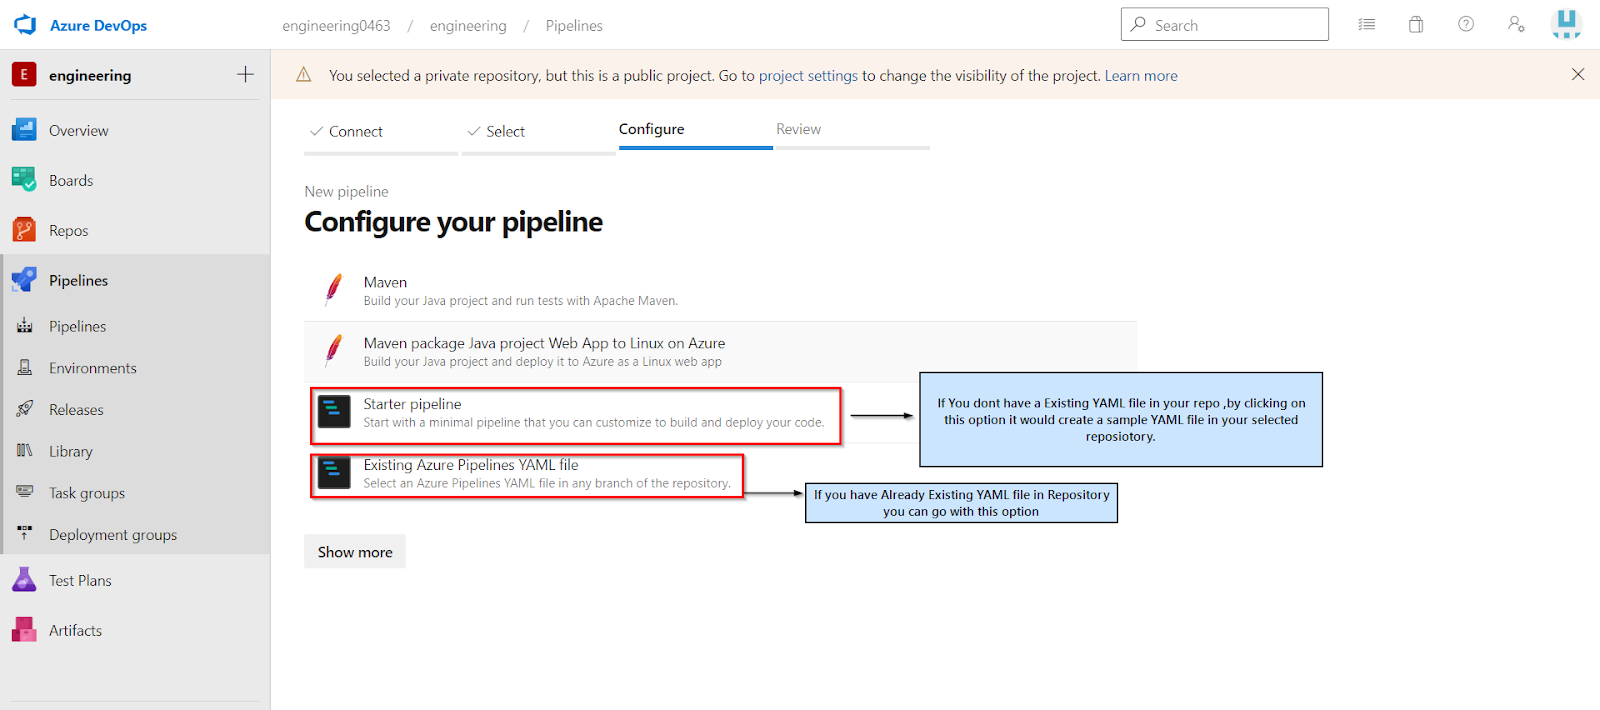 configure your pipeline page in Azure DevOps